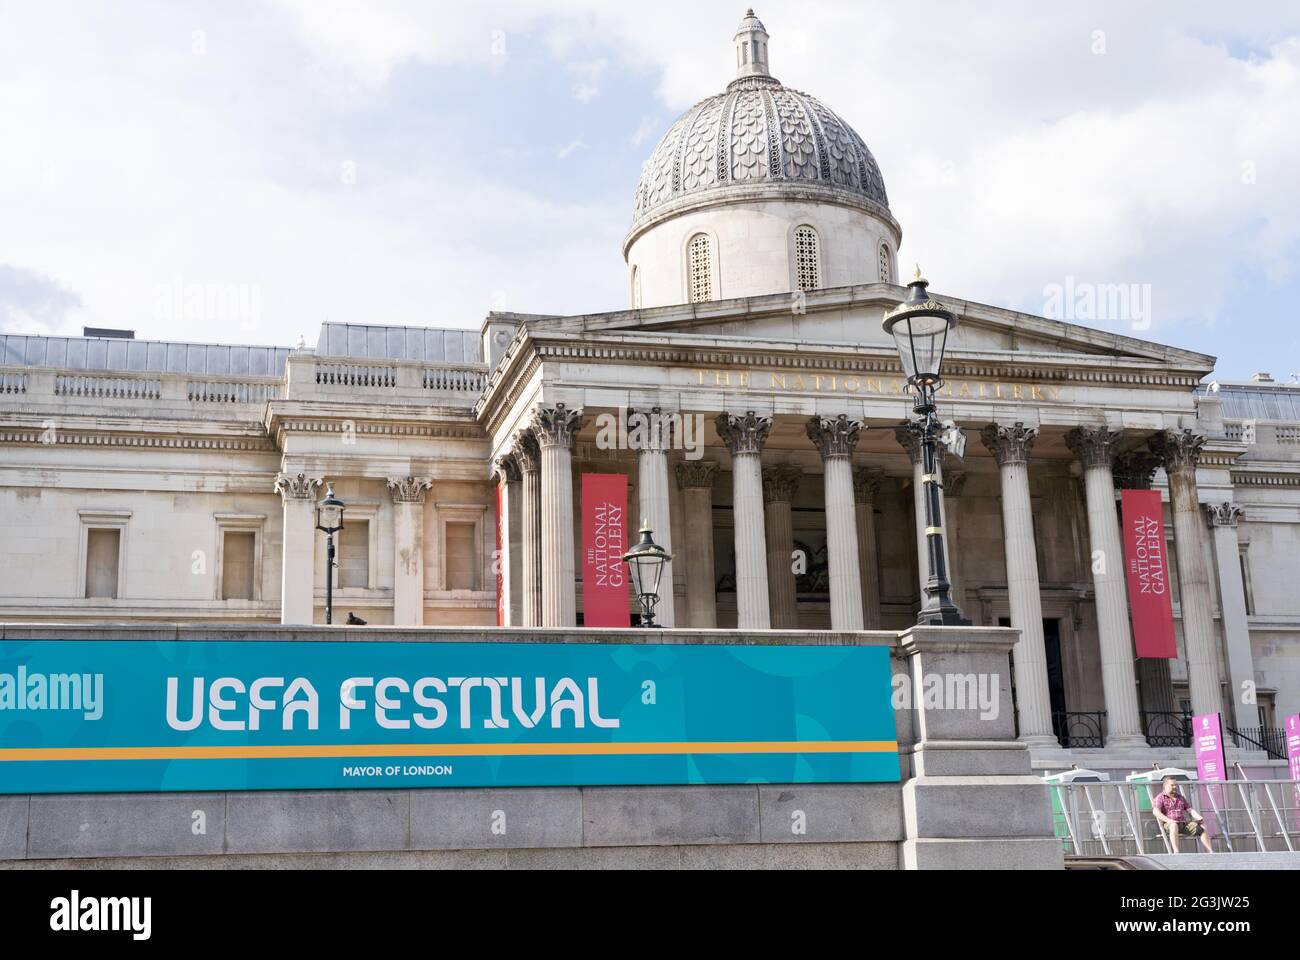 UEFA Festival, London Trafalgar Square, London, England Stockfoto